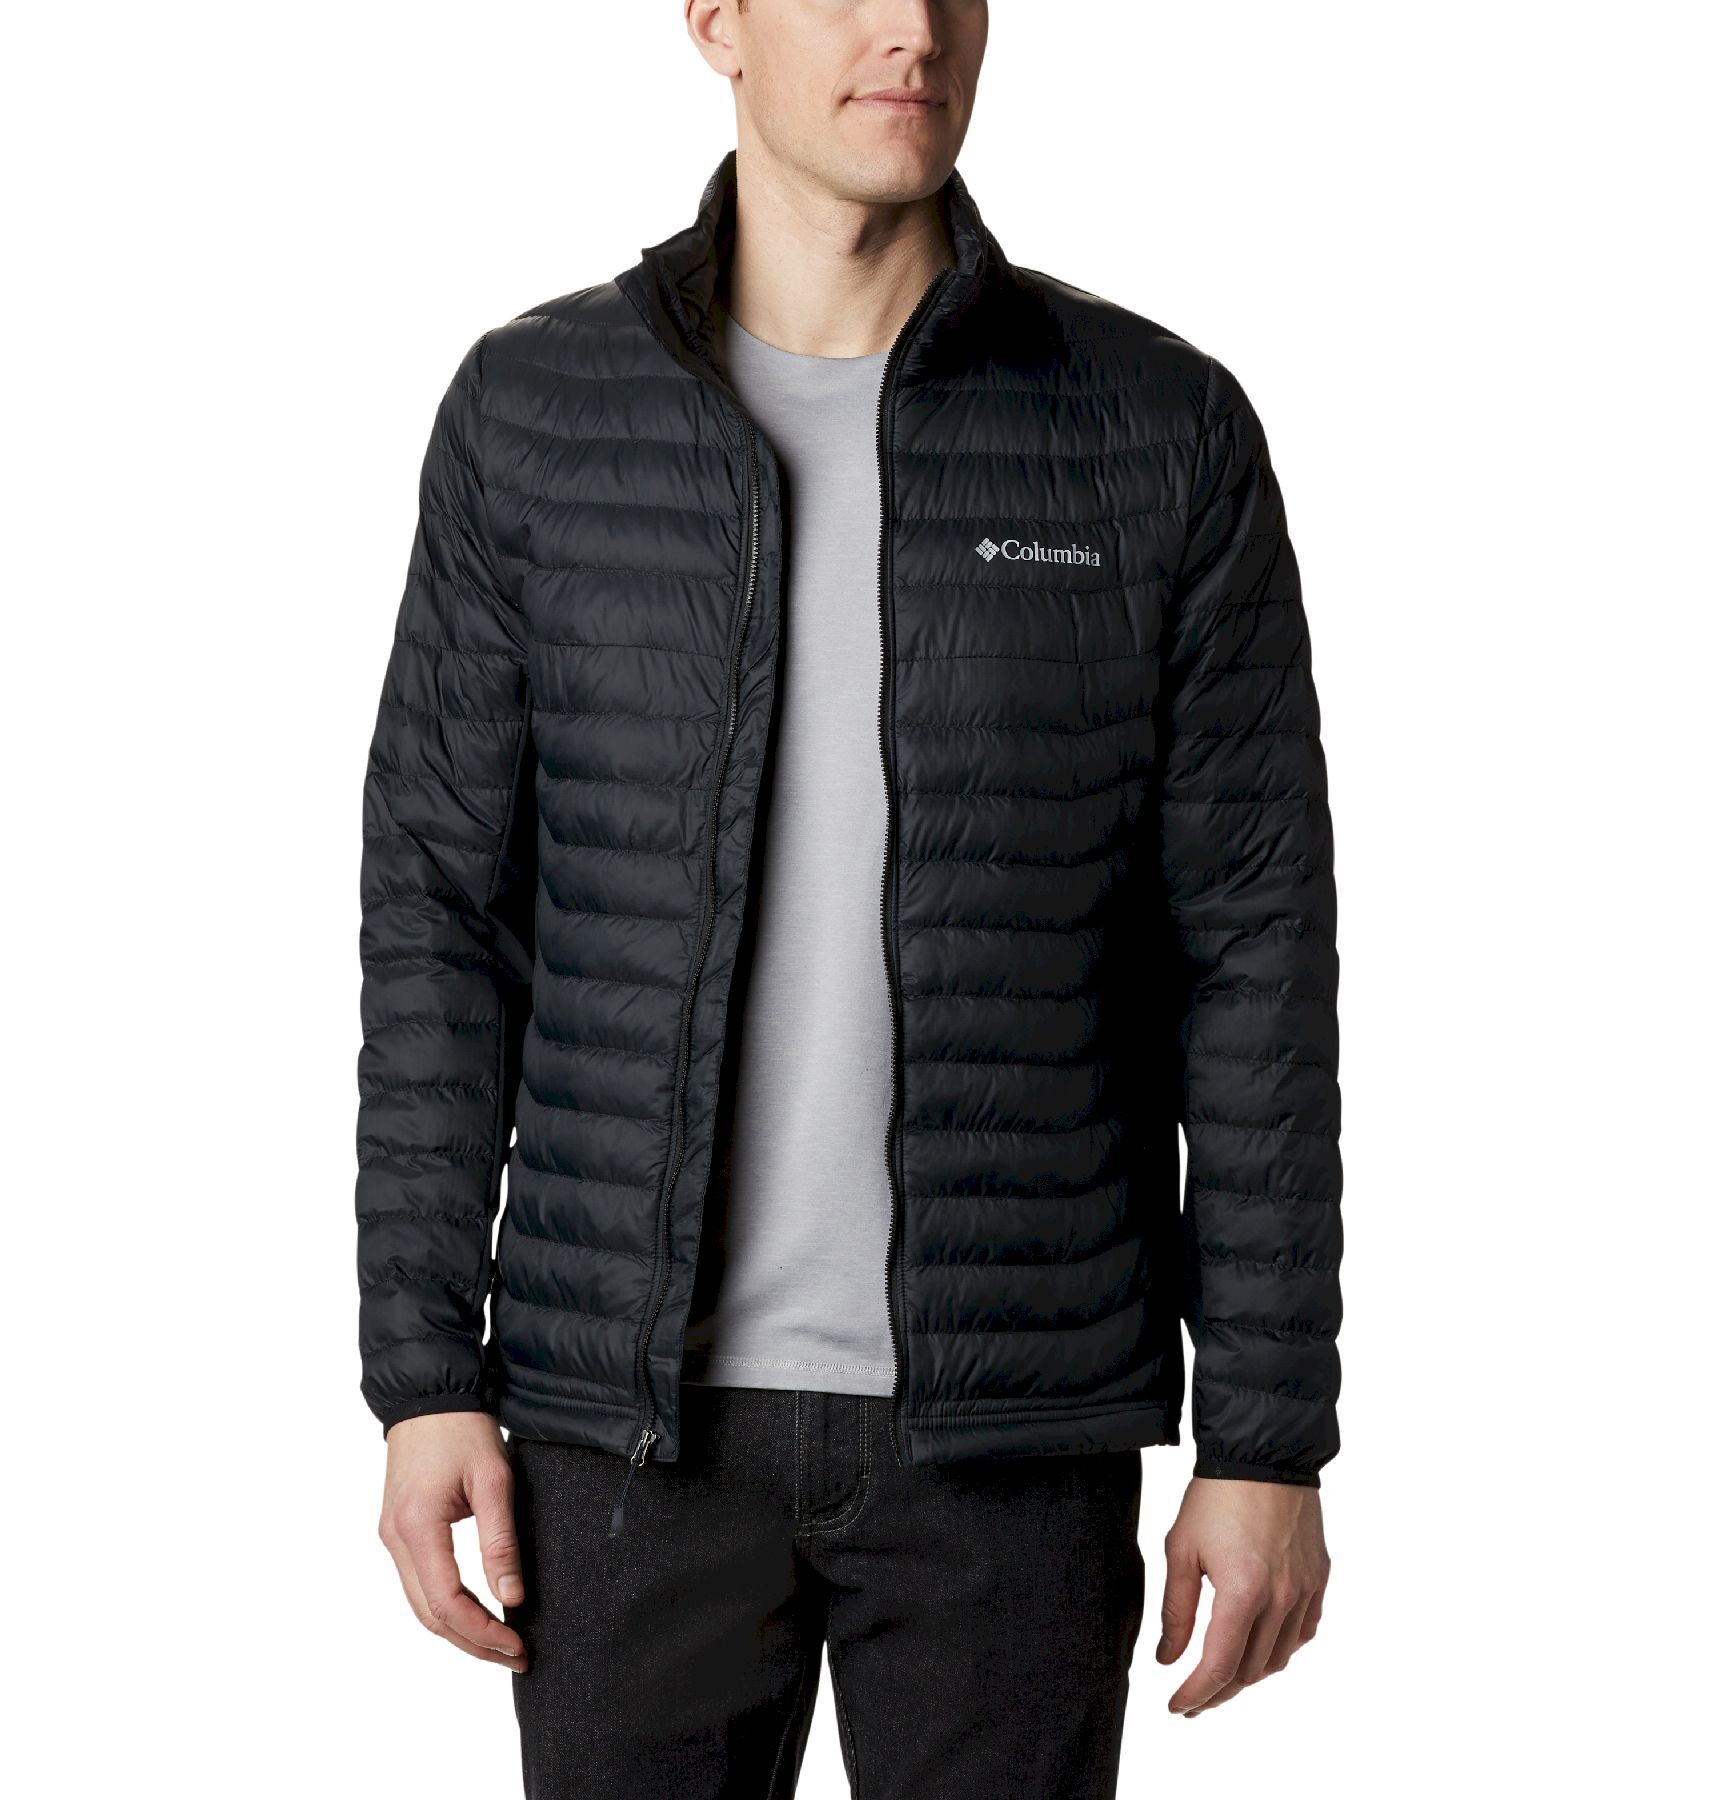 Columbia Powder Pass Jacket - Synthetic jacket - Men's